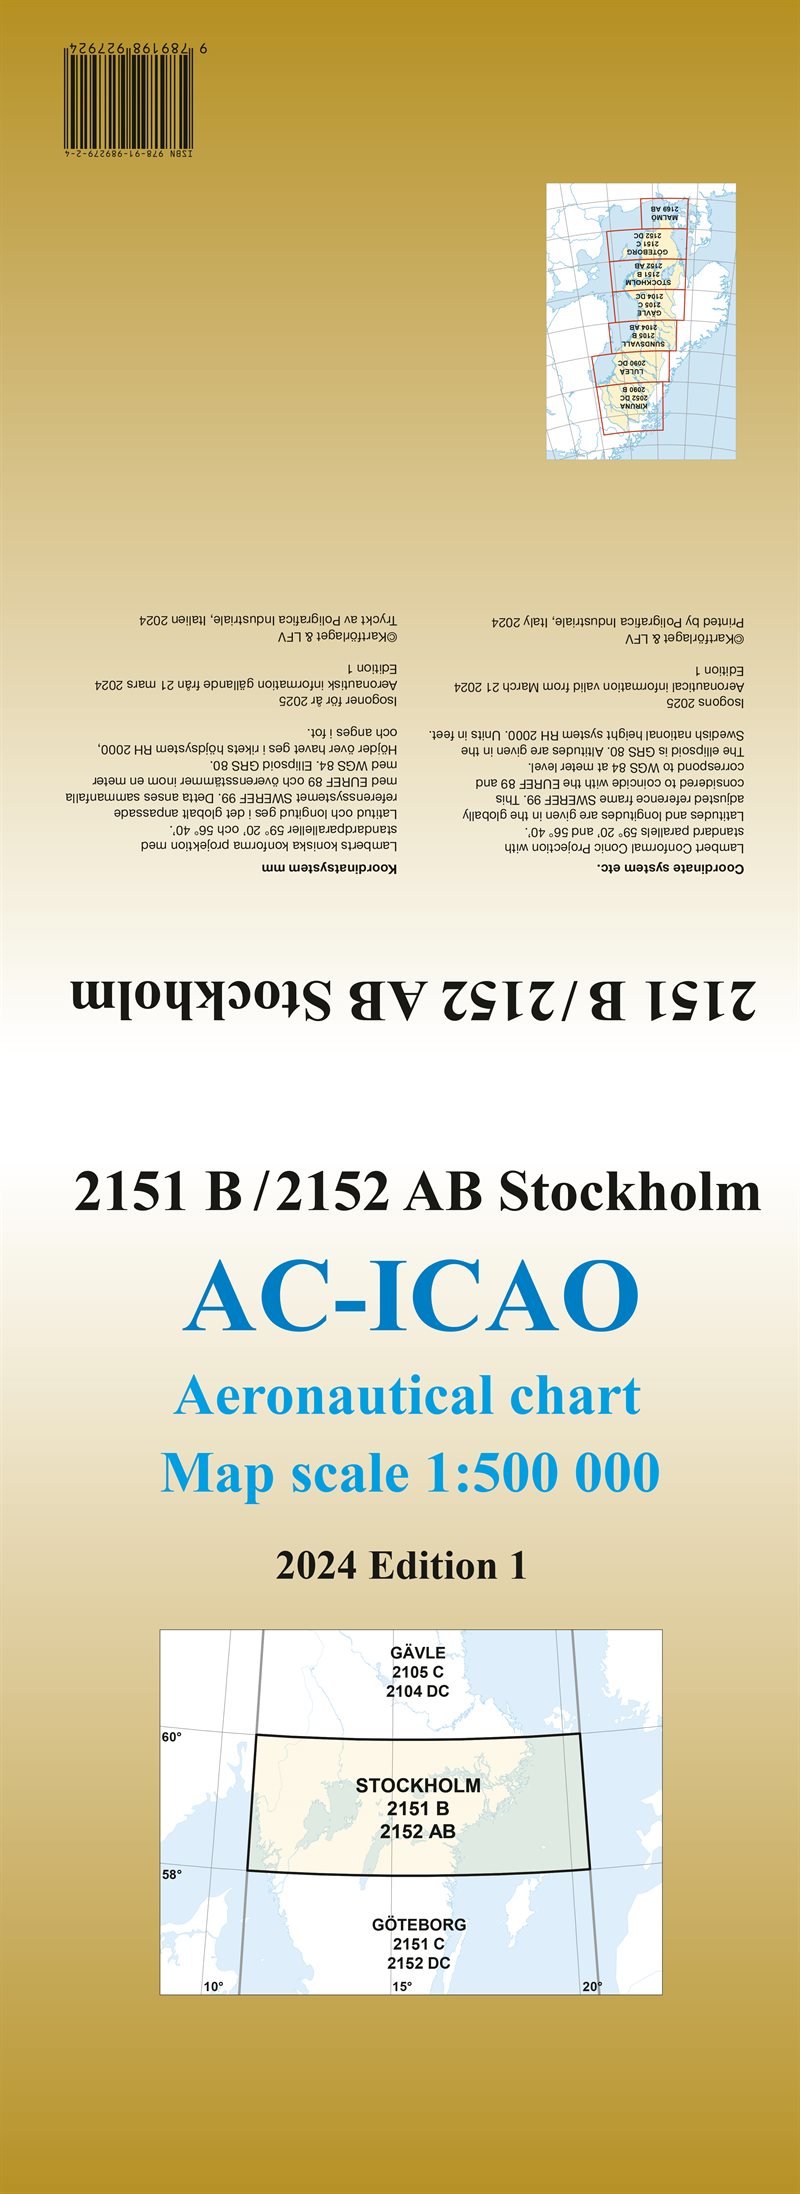 ACICAO 2151B/2152AB Stockholm 2024 : Skala 1:500 000